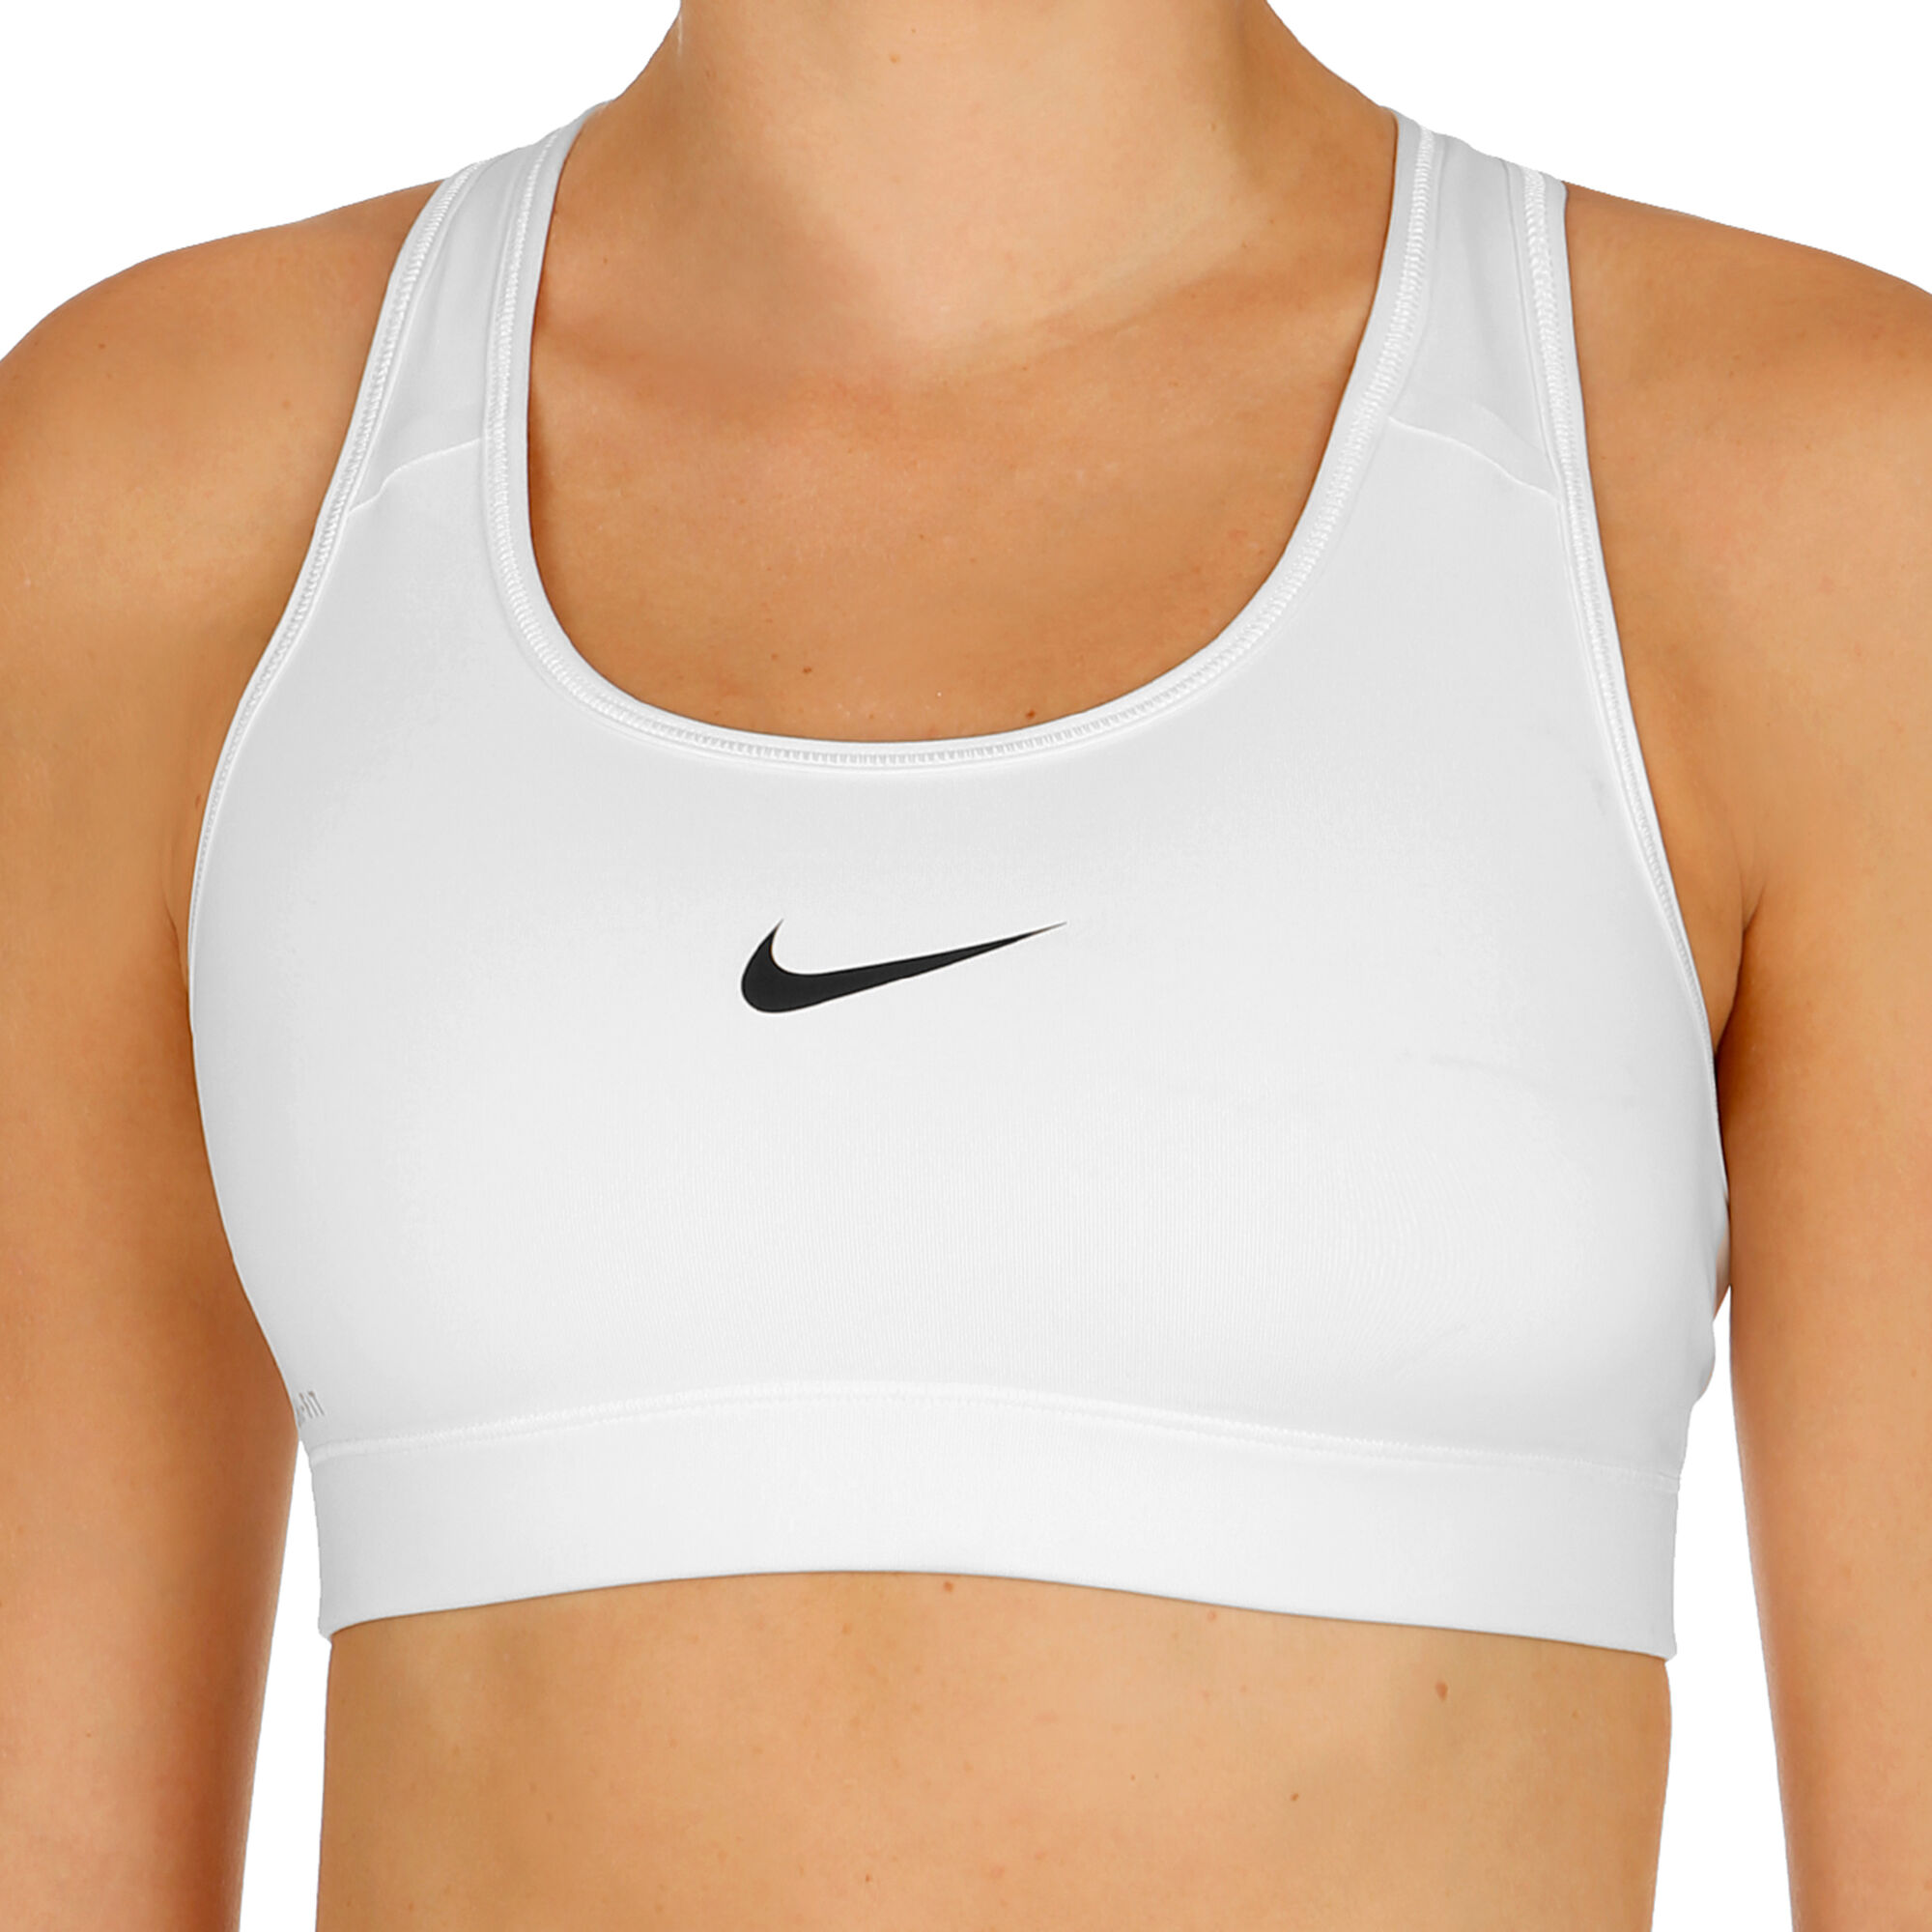 Nike Women's Victory Compression Sports Bra, Black/White, Small